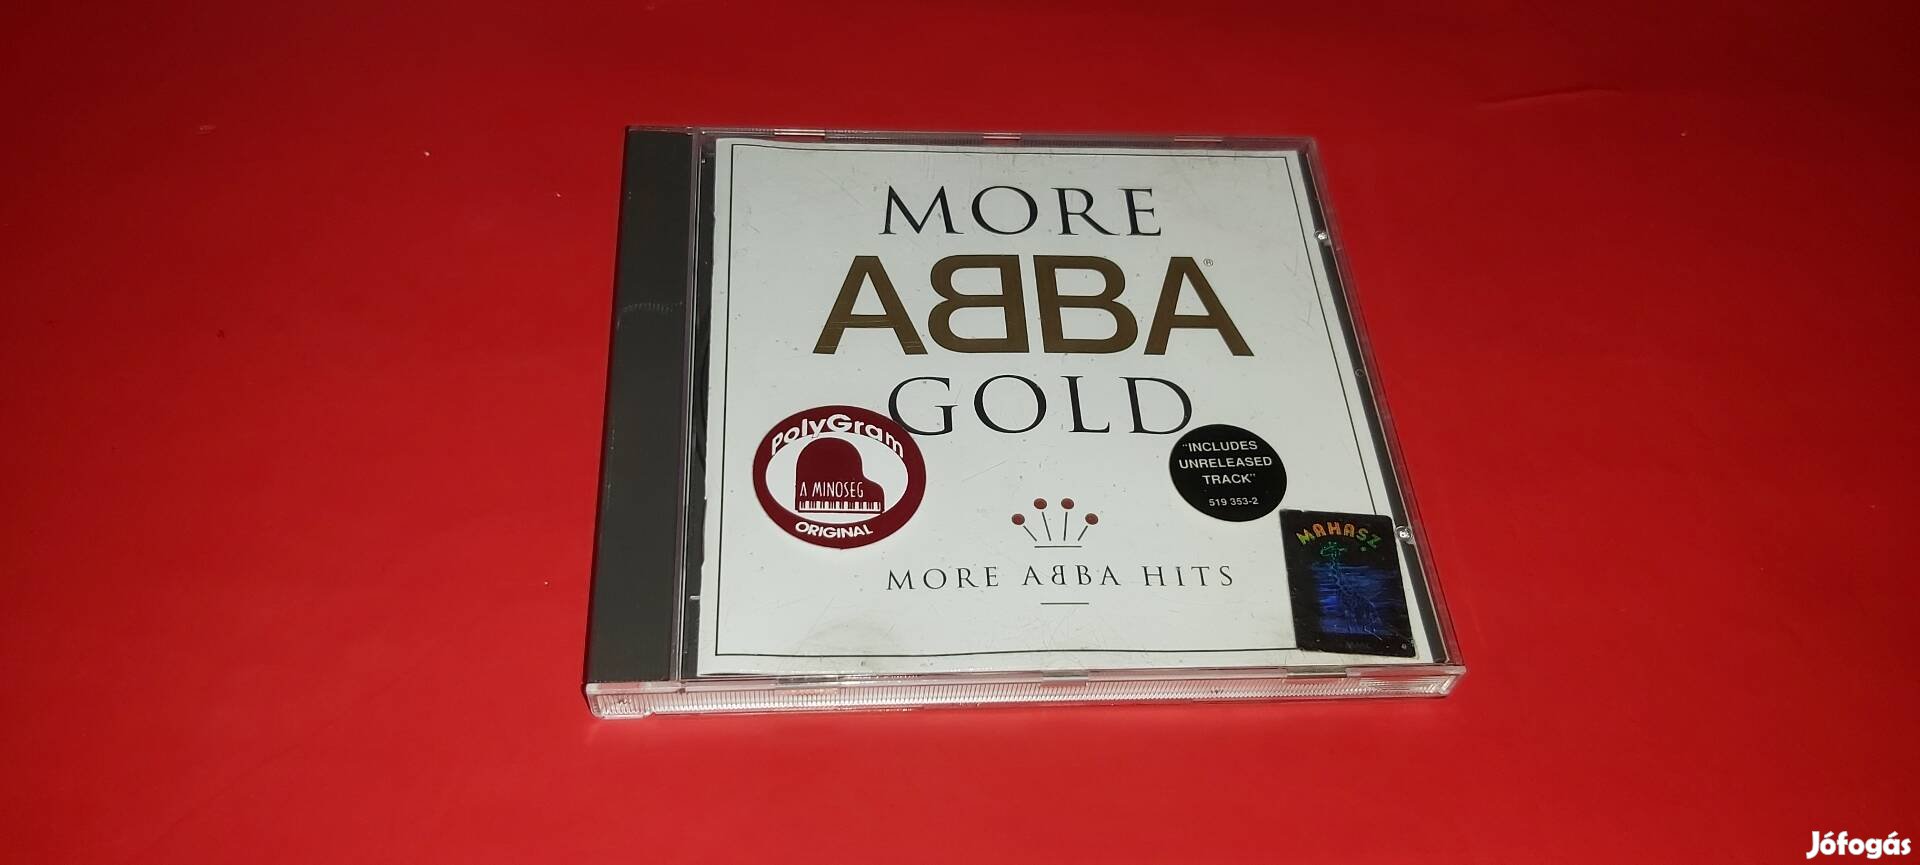 ABBA Gold more ABBA hits Cd 1993